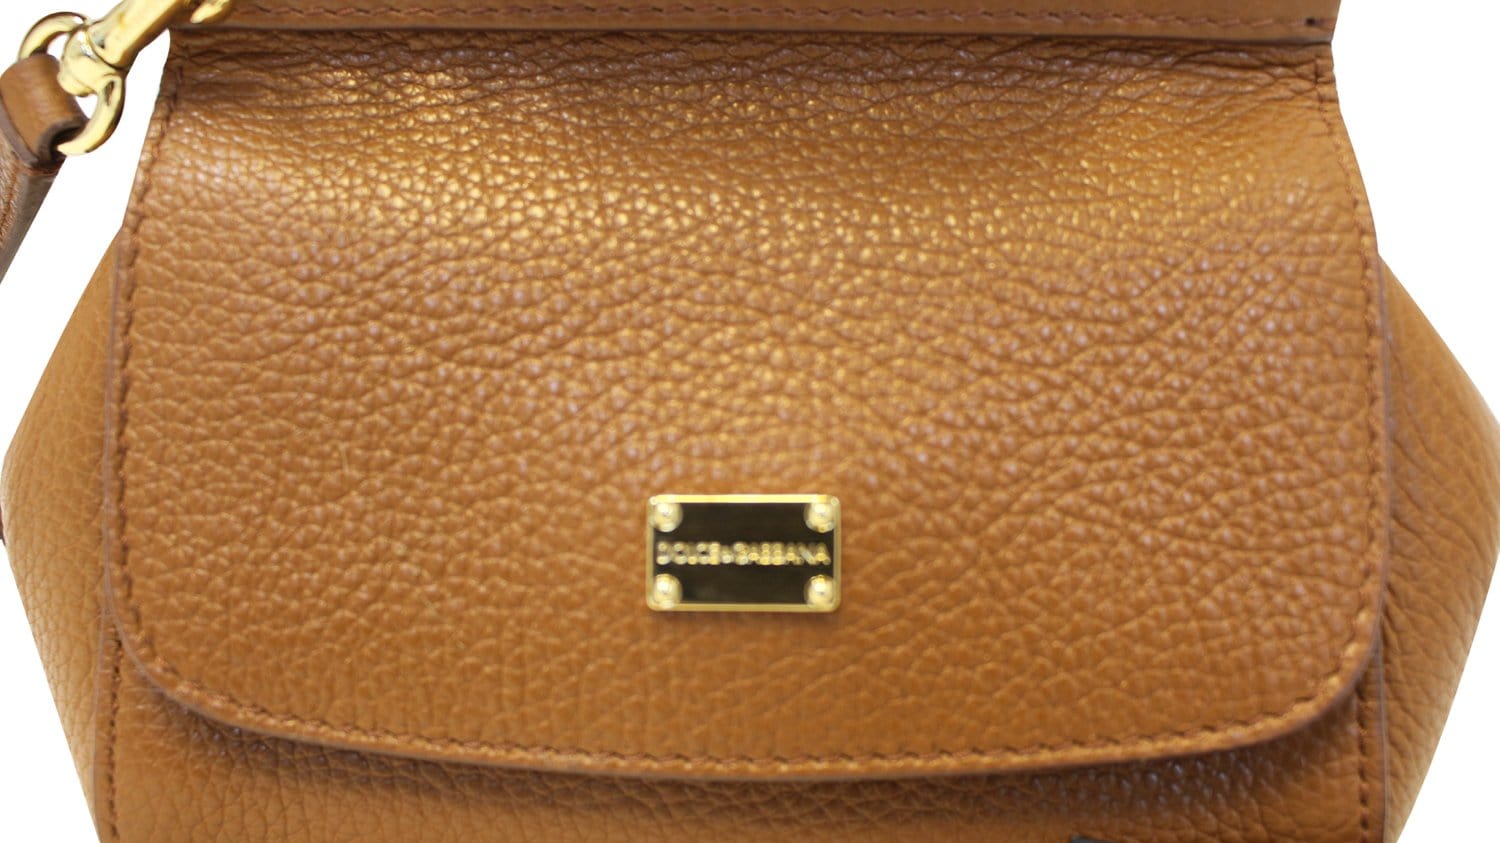 Dolce & Gabbana Small Sicily Handbag in Orange